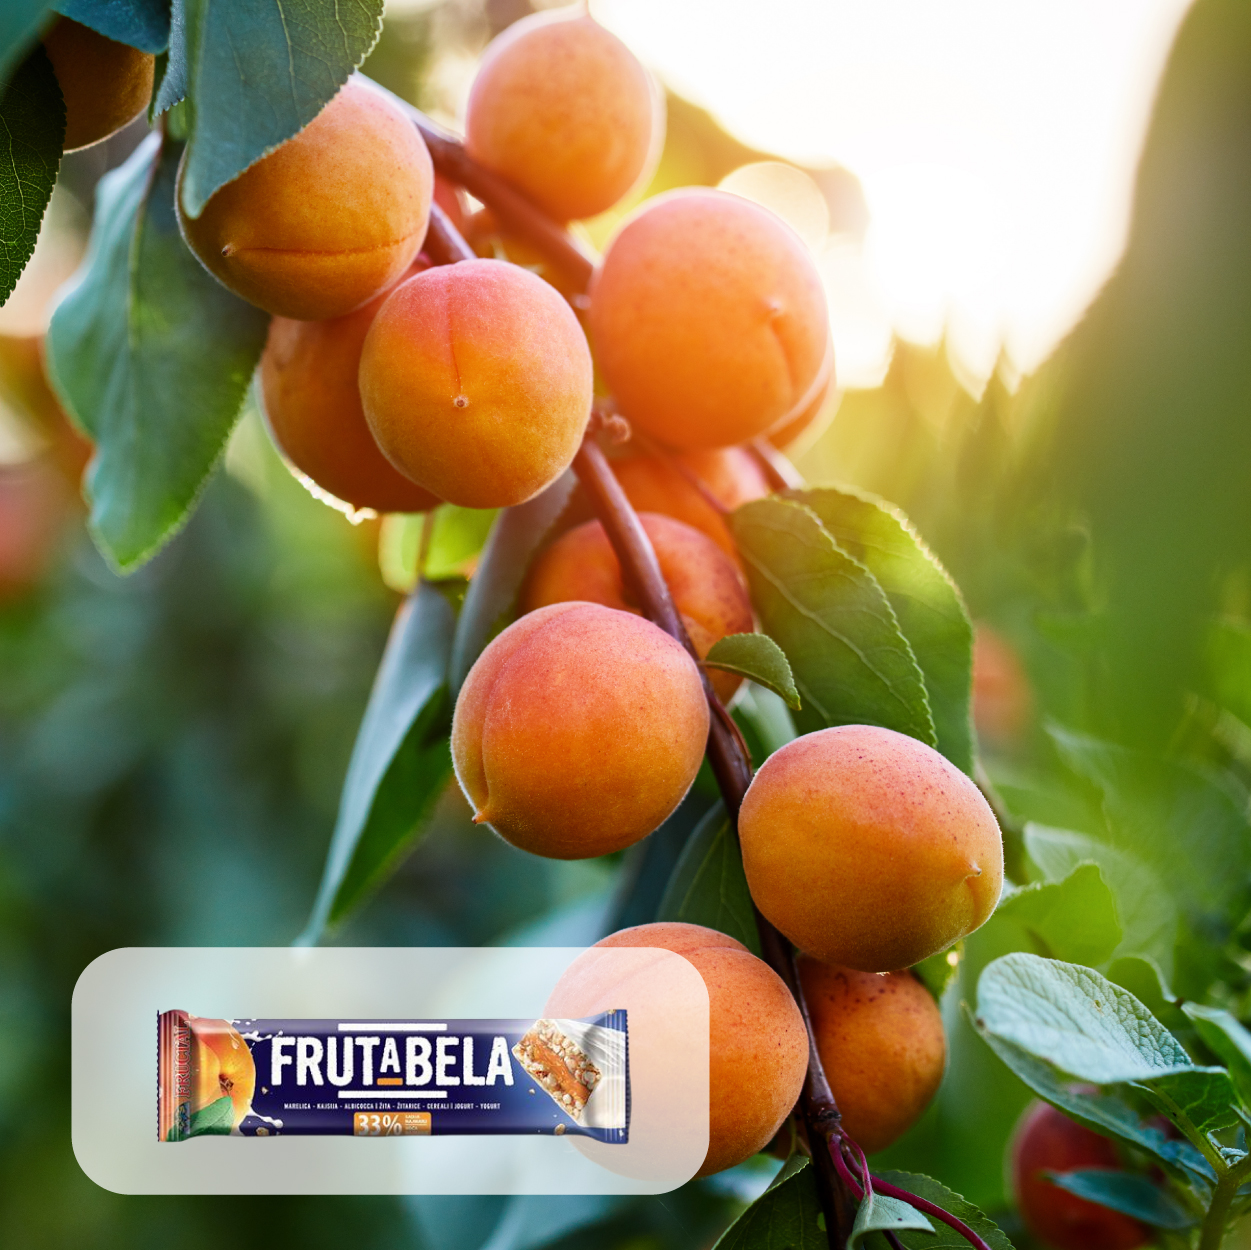 Frutabela 低卡纖果棒(杏桃與優格口味) 打破您對穀麥棒的既有印象